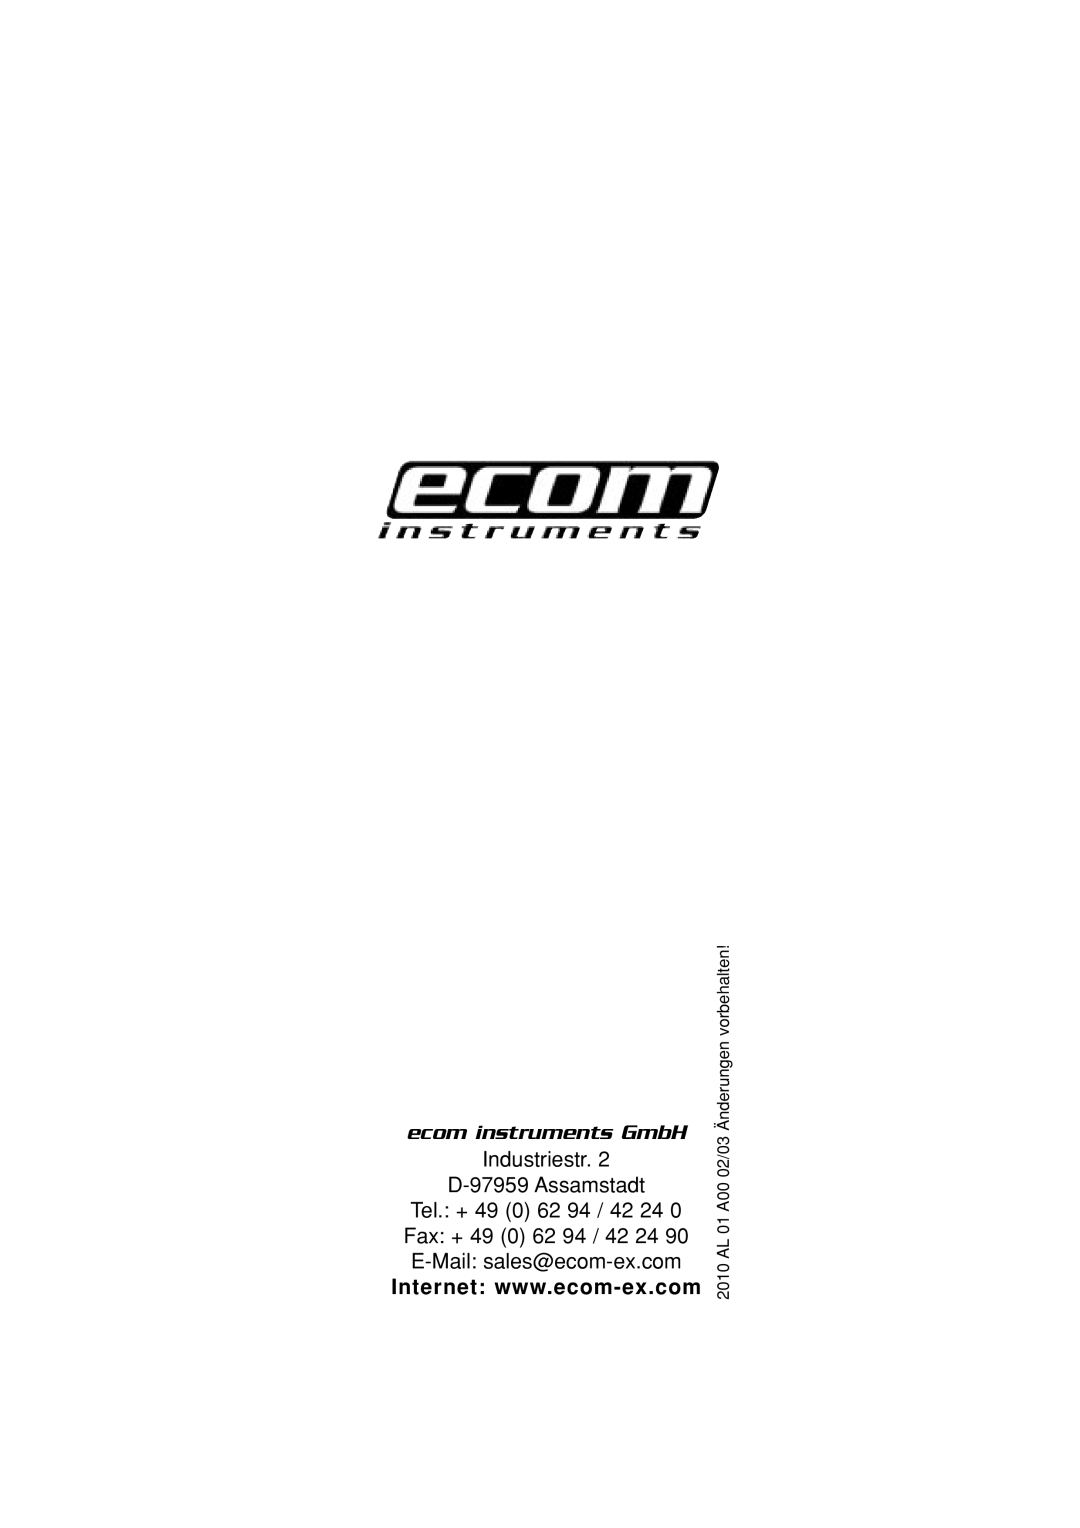 Ecom Instruments Lite-Ex LED 30 manual ecom instruments GmbH, 2010 AL 01 A00 02/03 Änderungen vorbehalten 